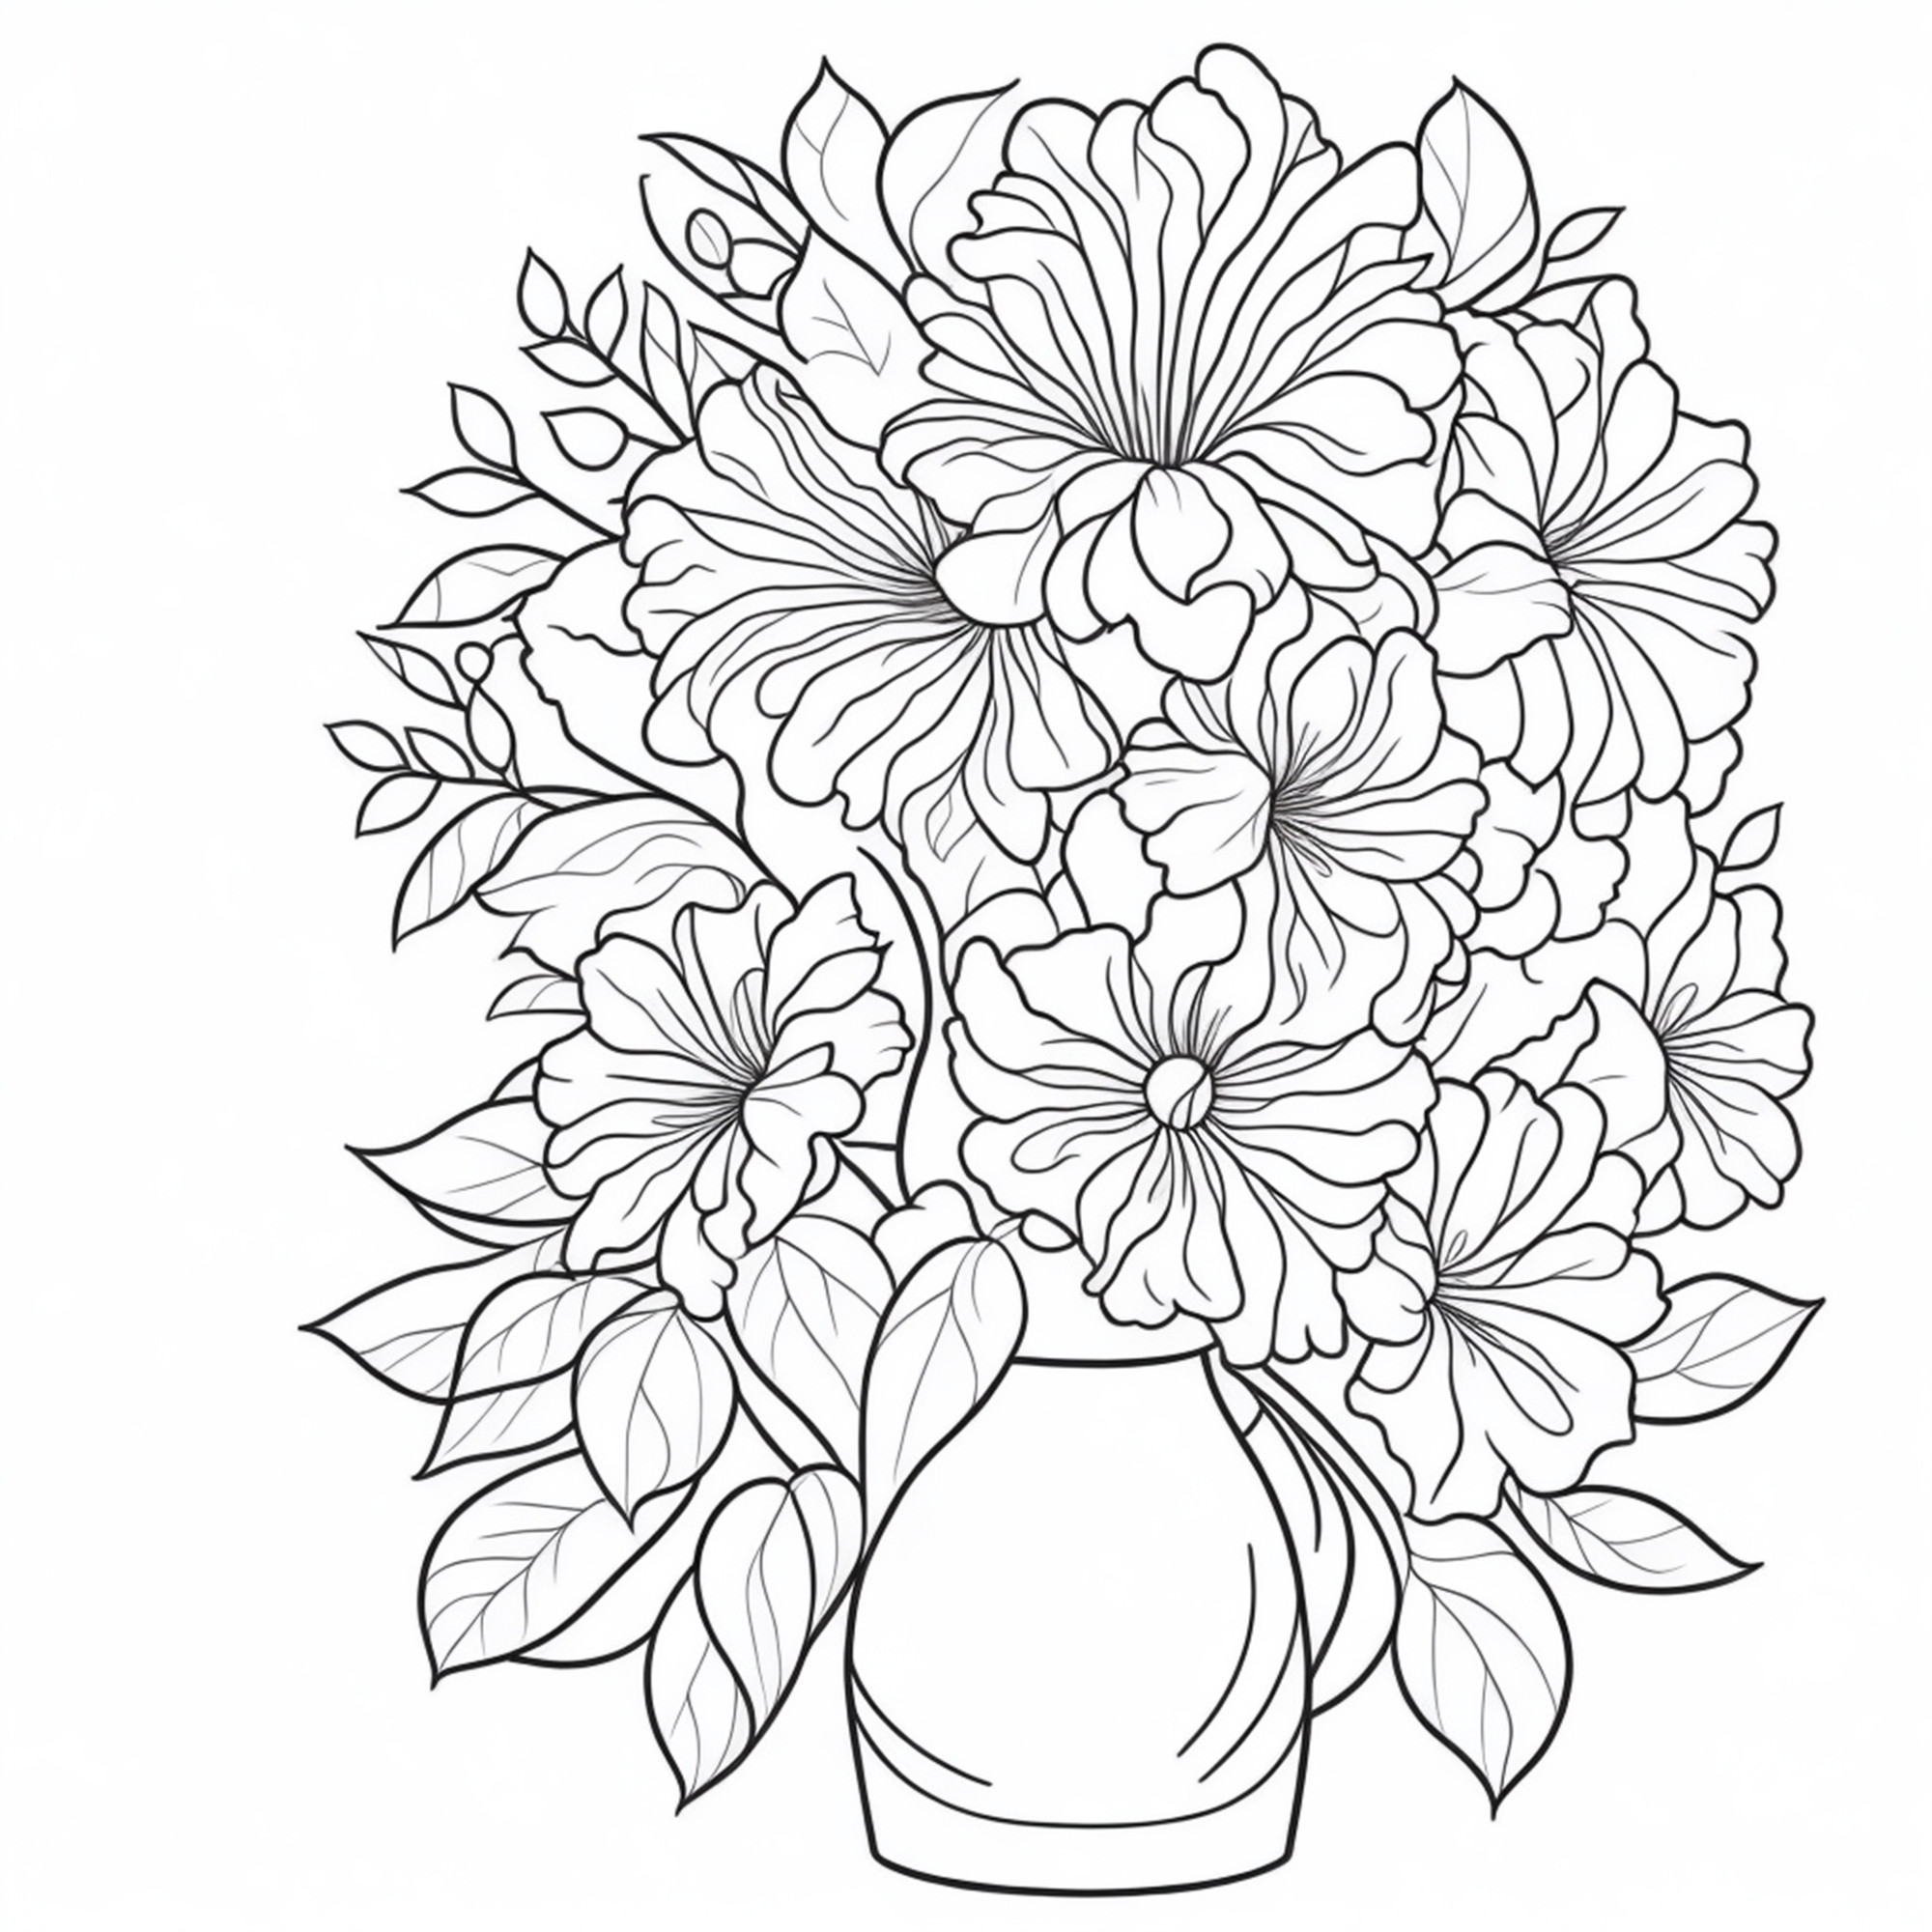 Раскраска для детей: натюрморт цветы в вазе